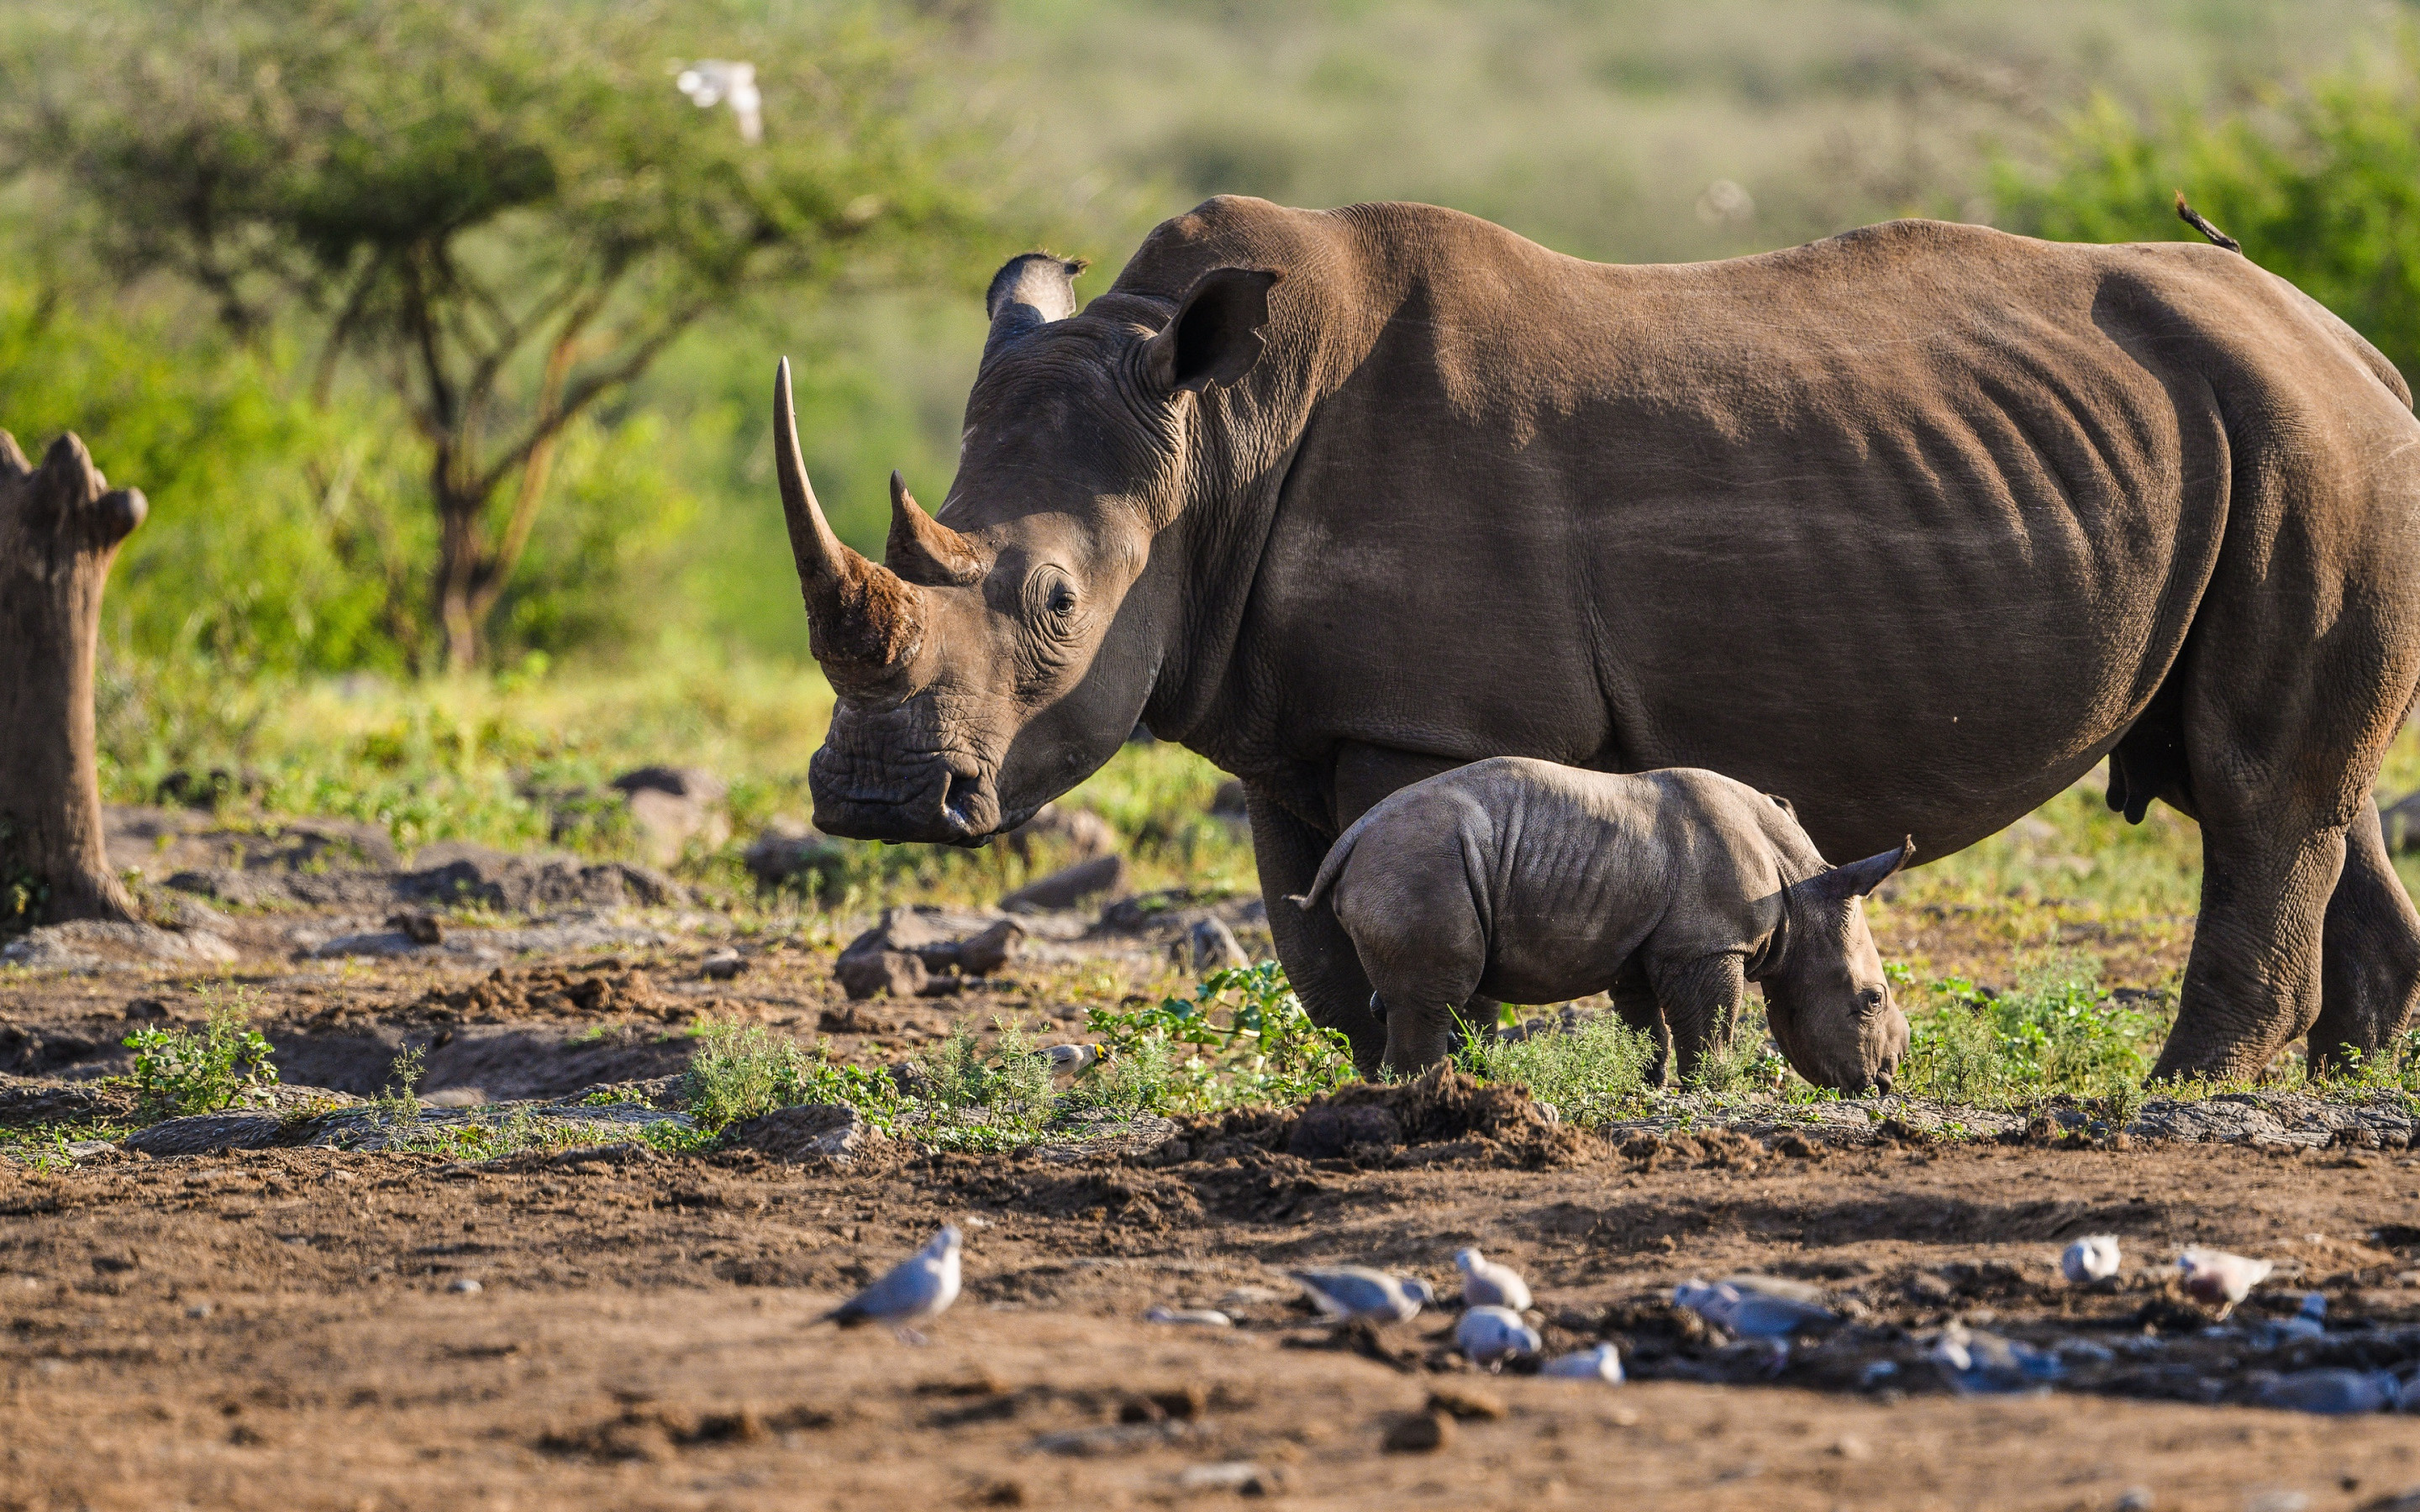 Mother rhino and baby, Wildlife scene wallpapers, Morning wildlife moment, Rhino bonding, 2880x1800 HD Desktop